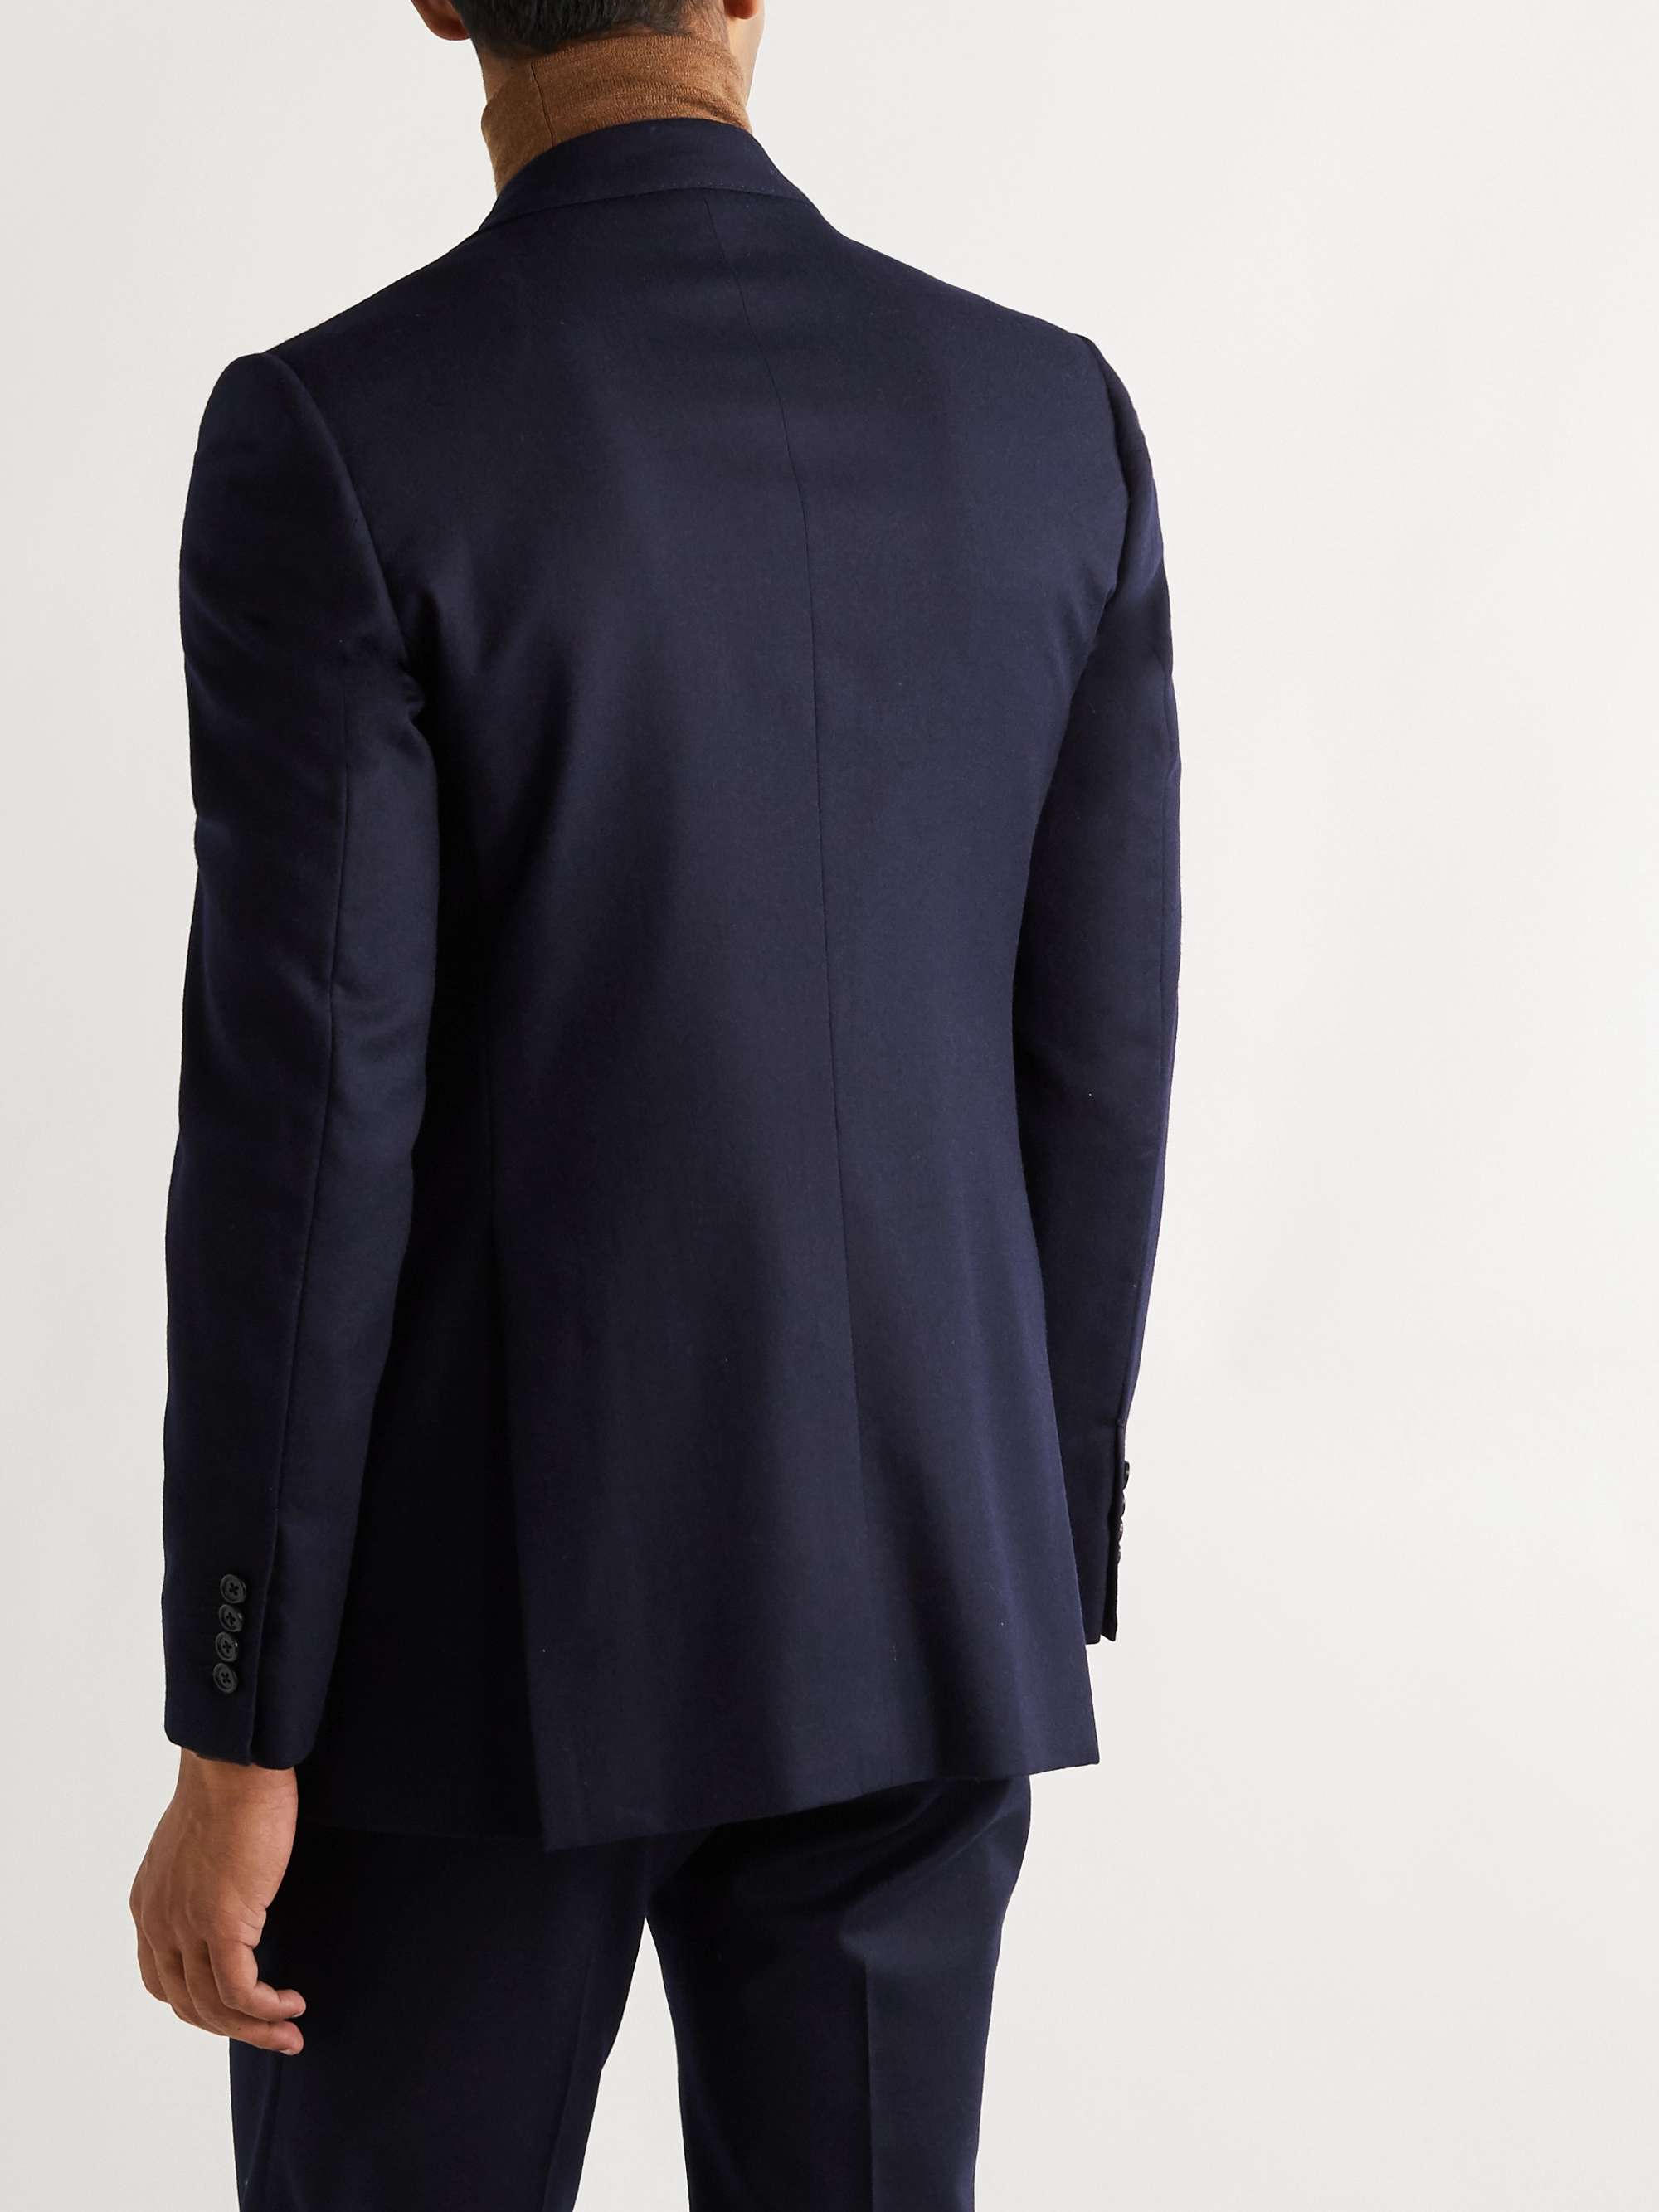 HUSBANDS Ferry Slim-Fit Merino Wool Suit Jacket